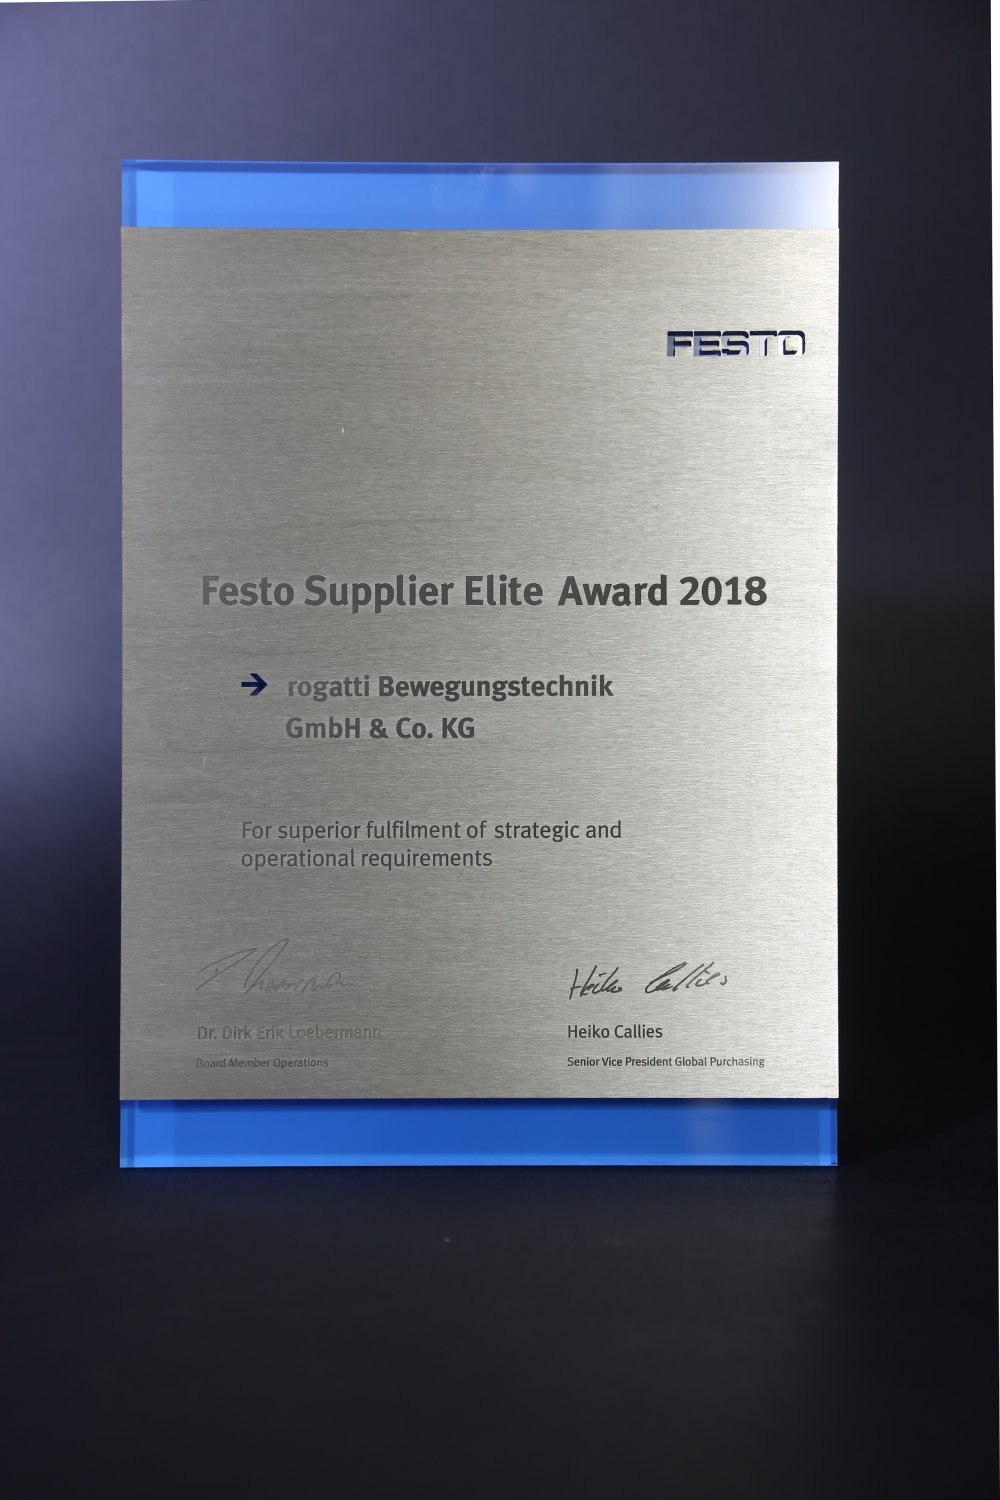 Festo Supplier Elite Award 2018